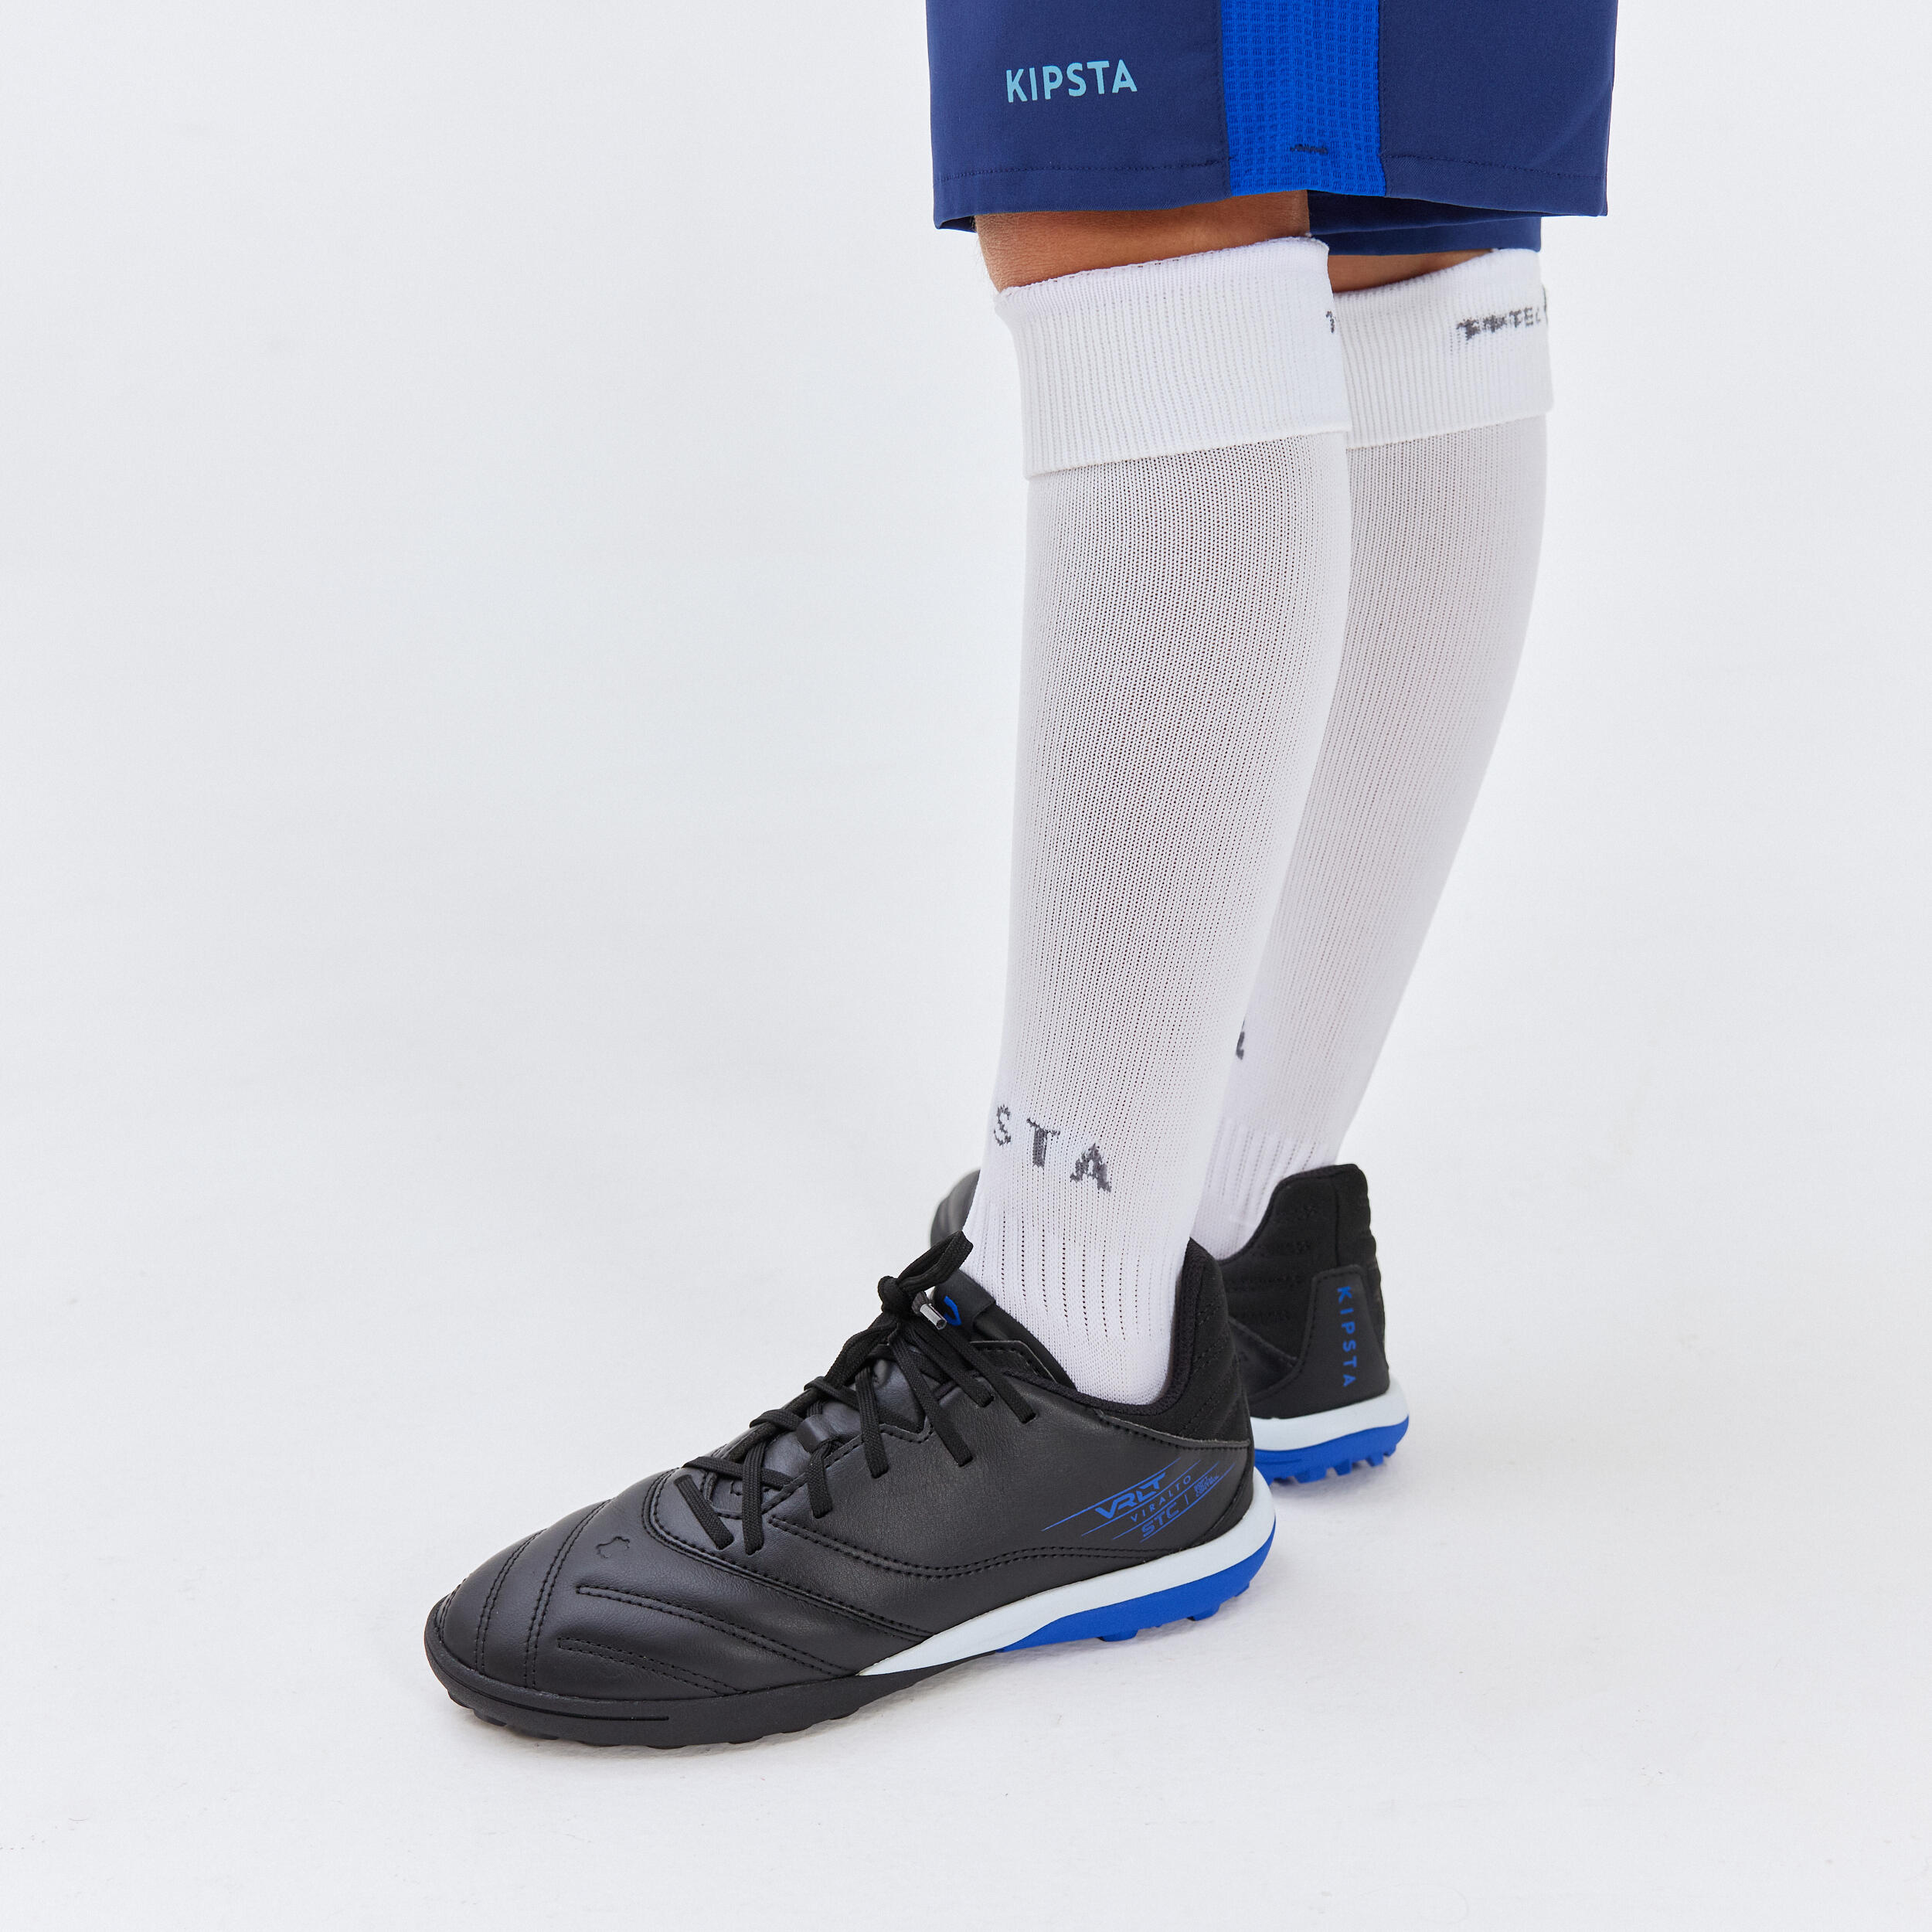 Kids' Lace-Up Leather Football Boots Viralto II Turf - Black/Lightning 13/13